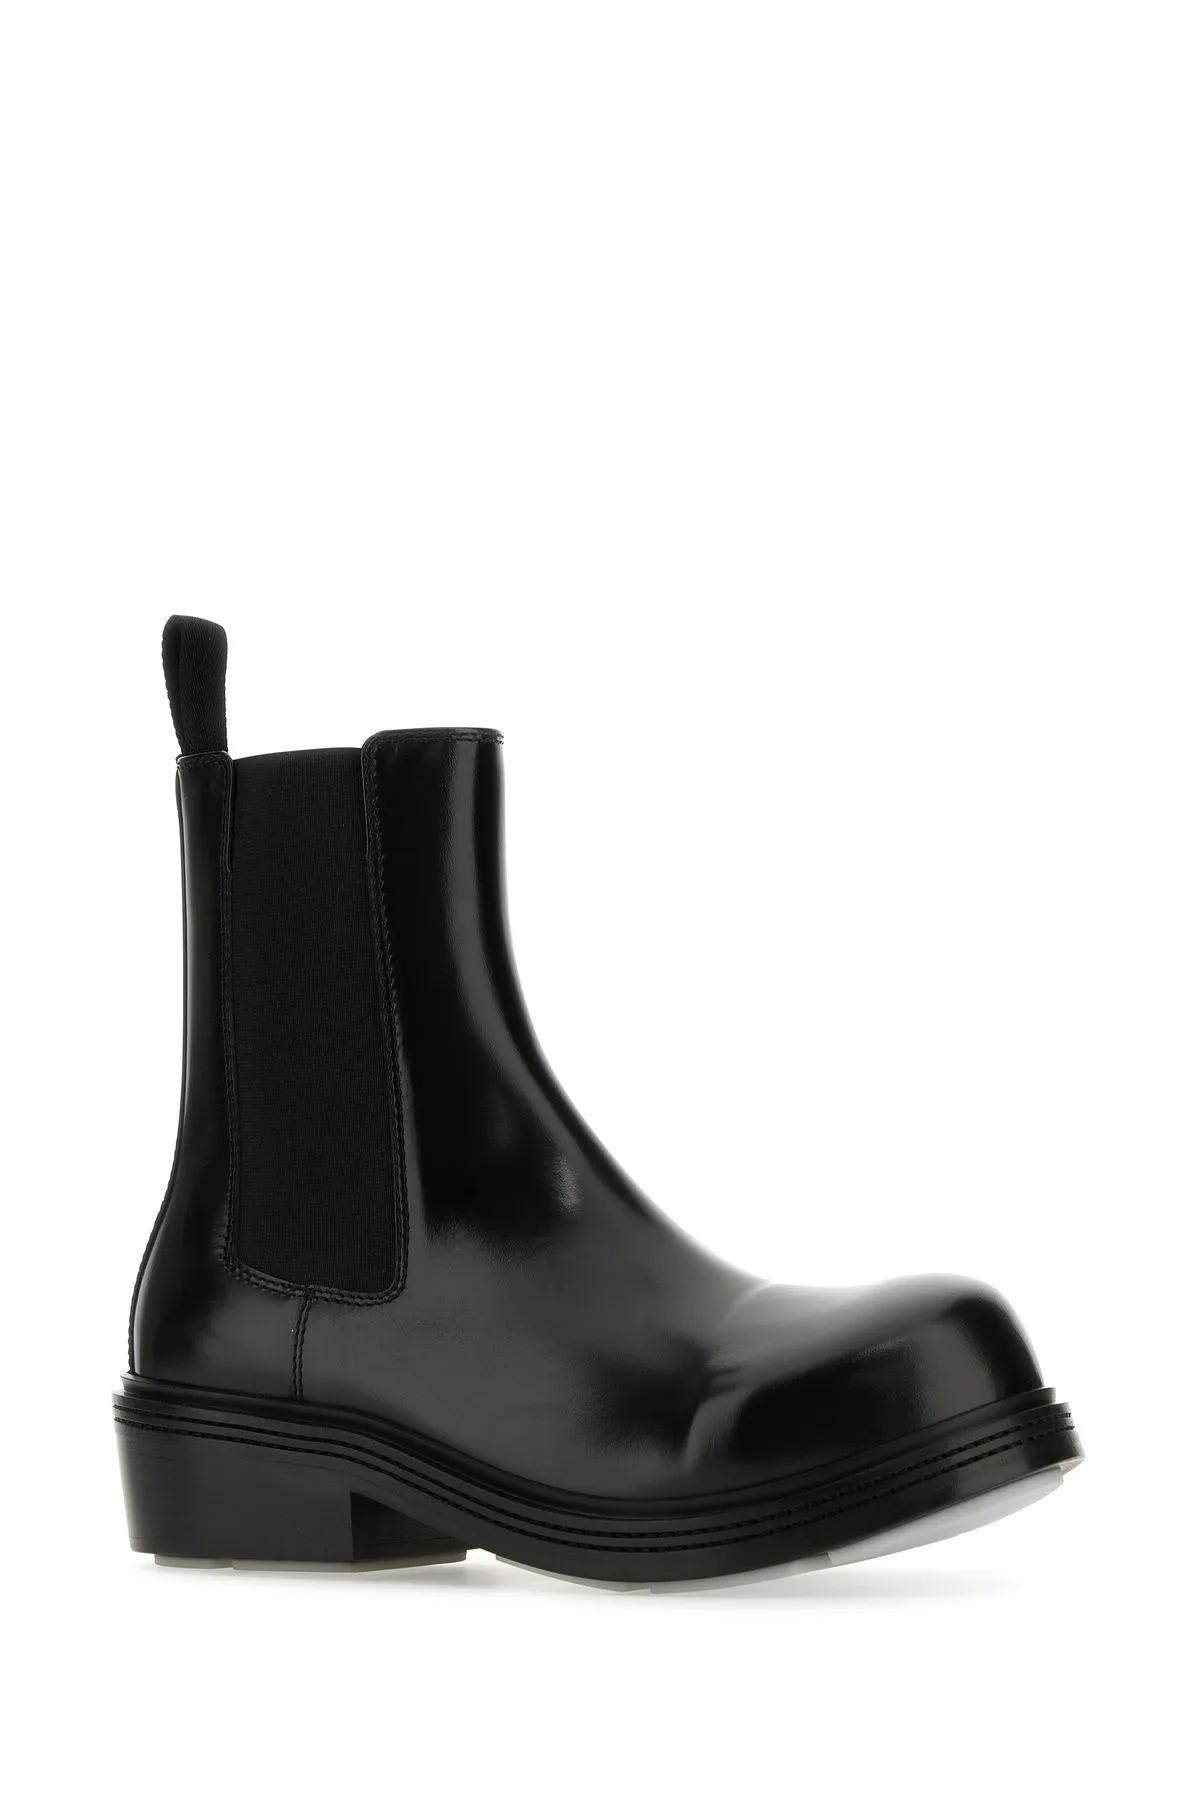 Shop Bottega Veneta Black Leather Ankle Boots